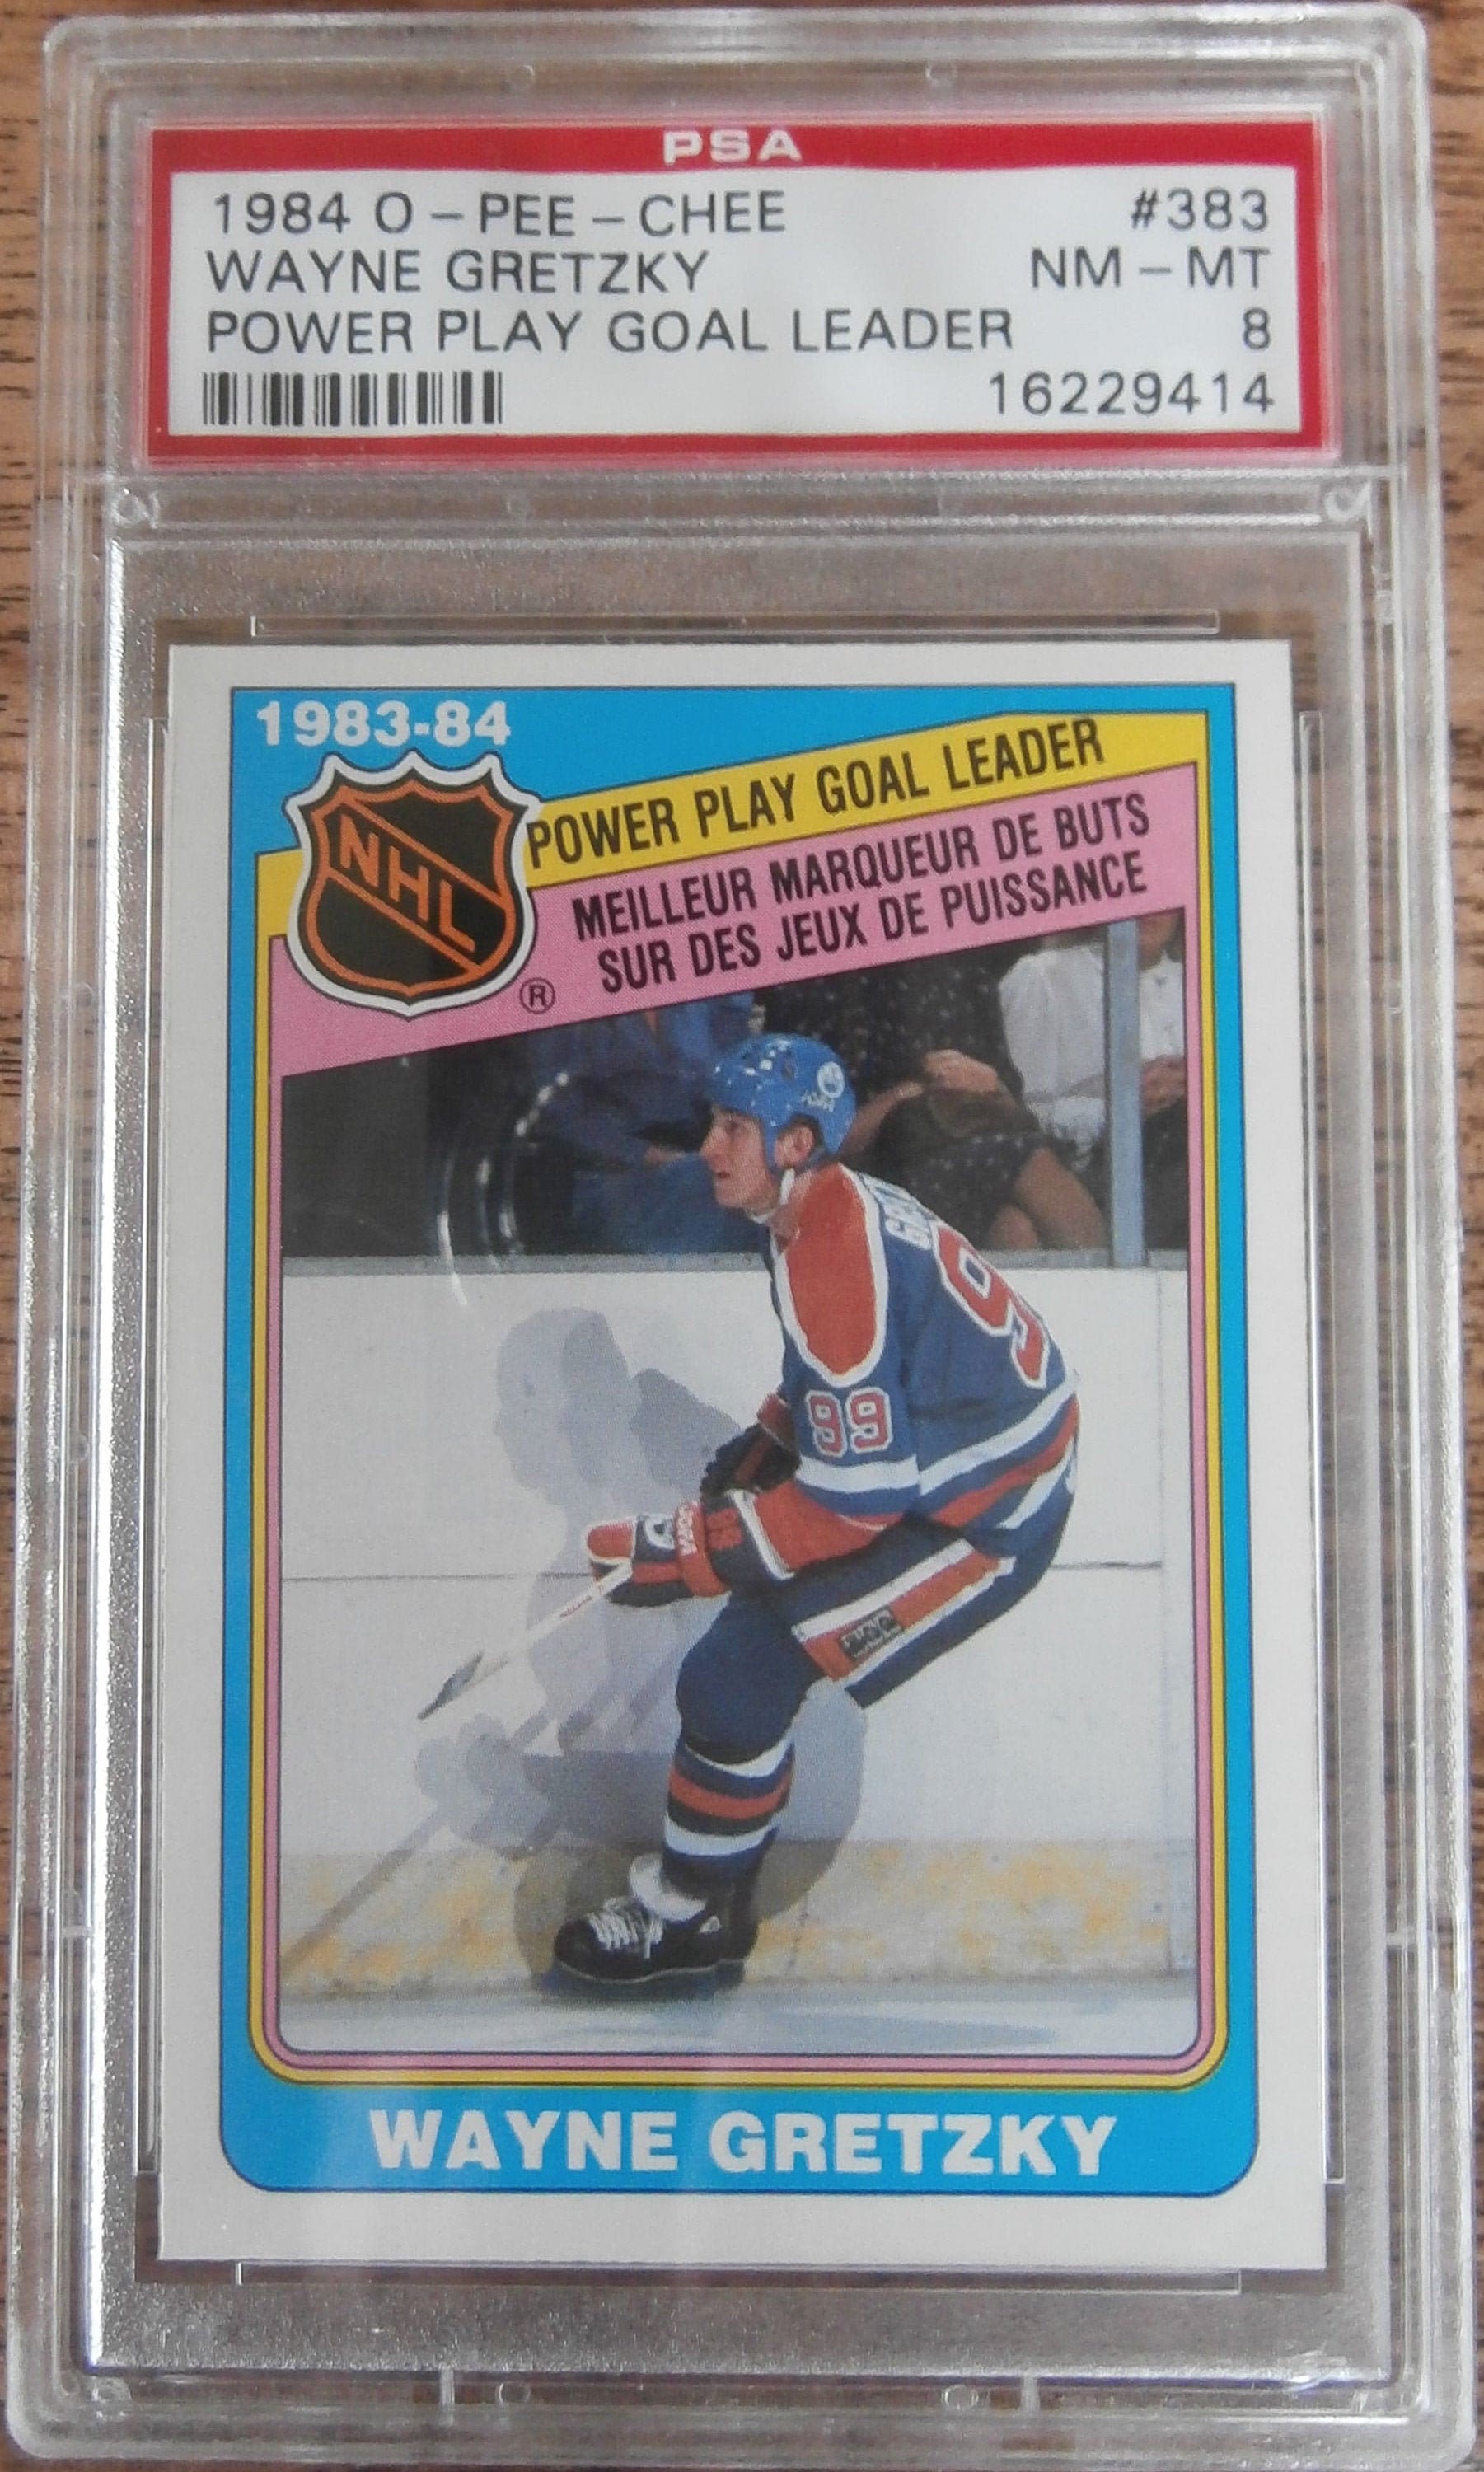 1988-89 Esso All-Stars BOBBY ORR-Boston Bruins & Wayne Gretzky-Oilers